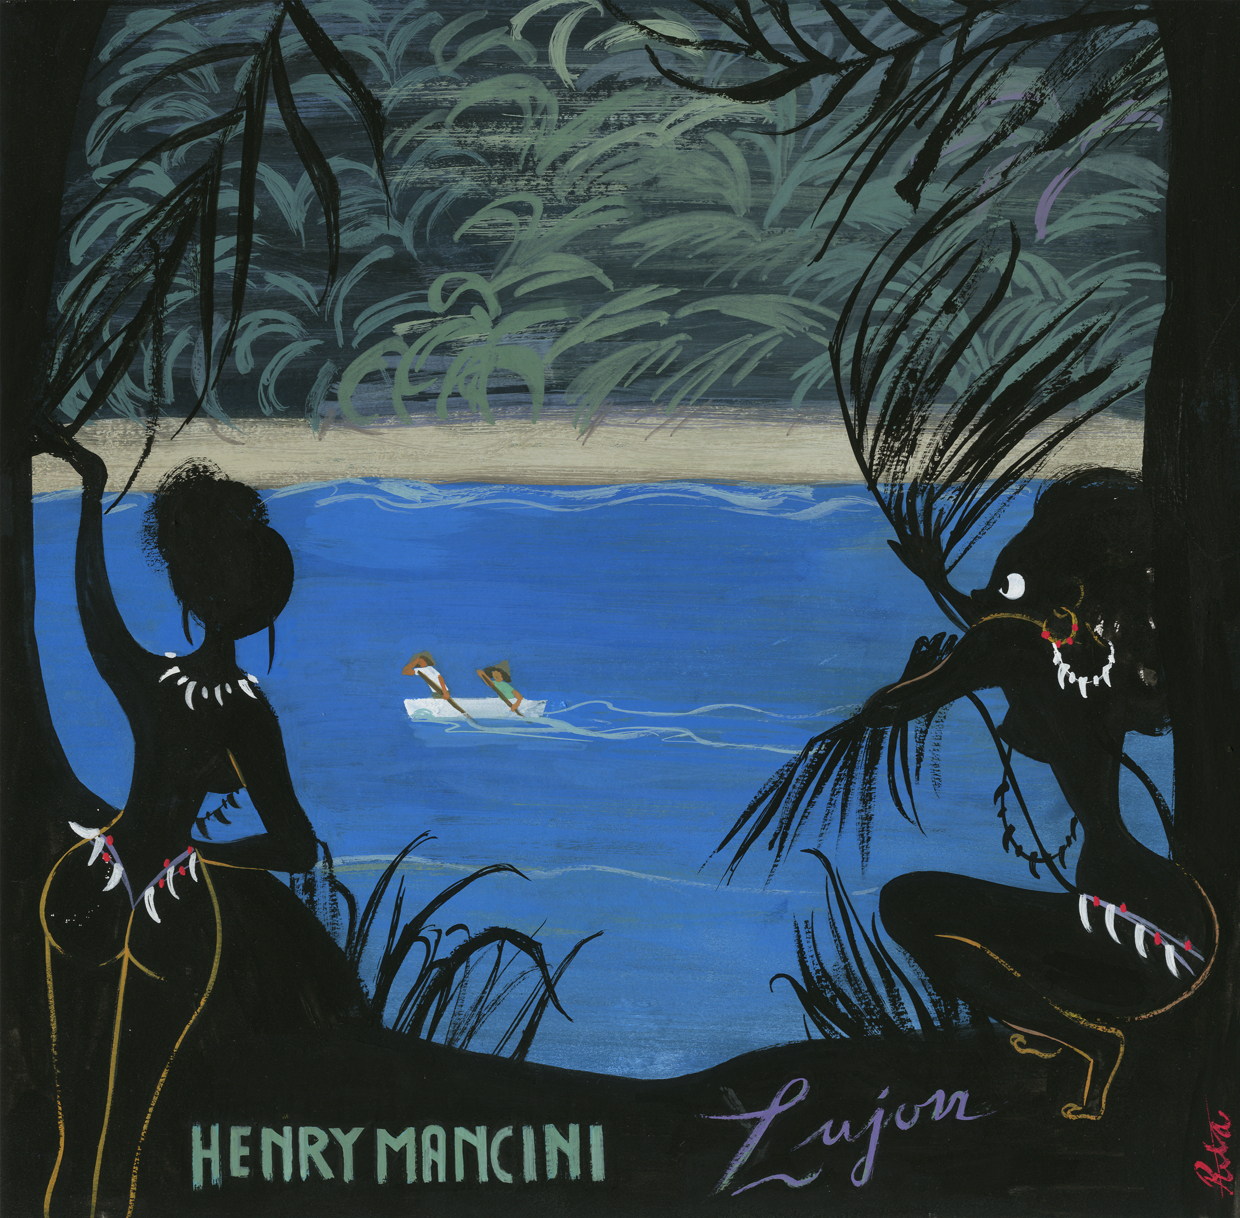 Henry Mancini “Lujon”